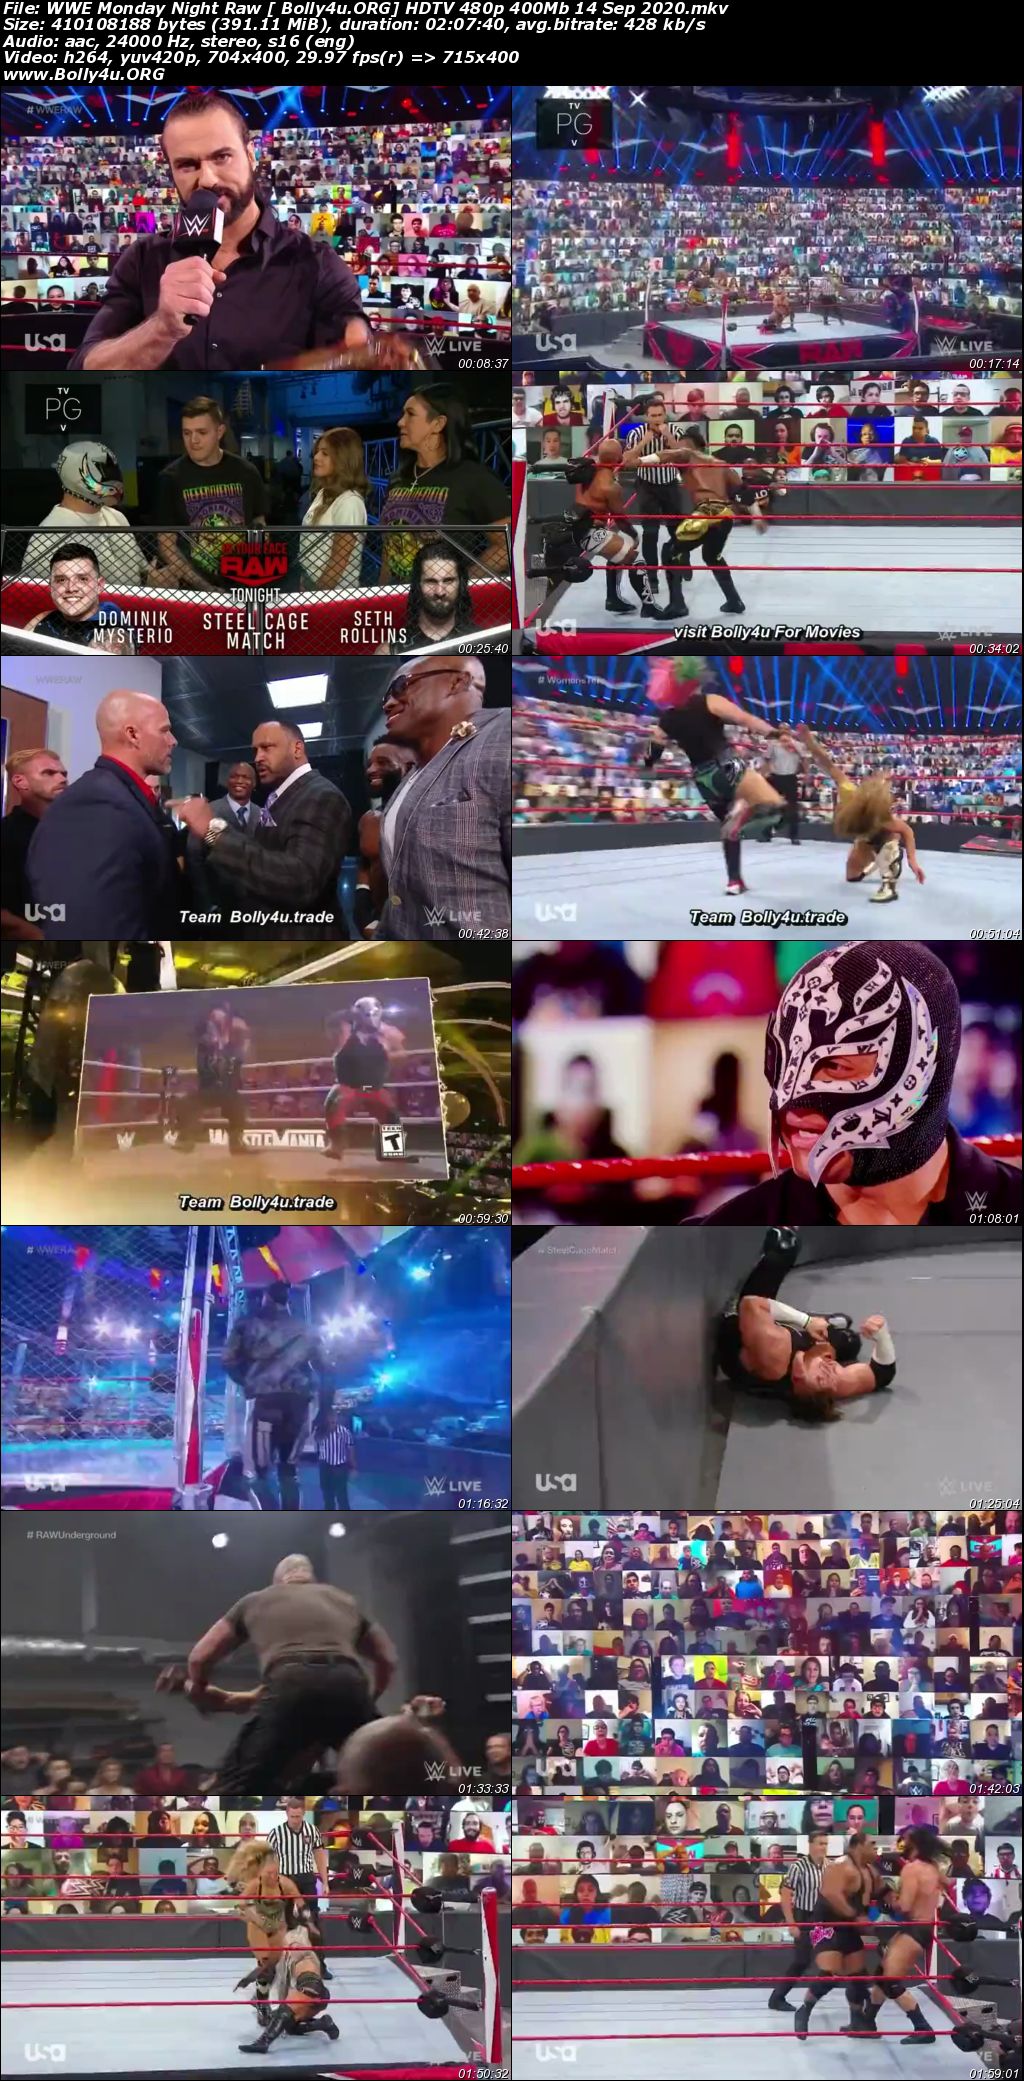 WWE Monday Night Raw HDTV 480p 400Mb 14 Sep 2020 Download